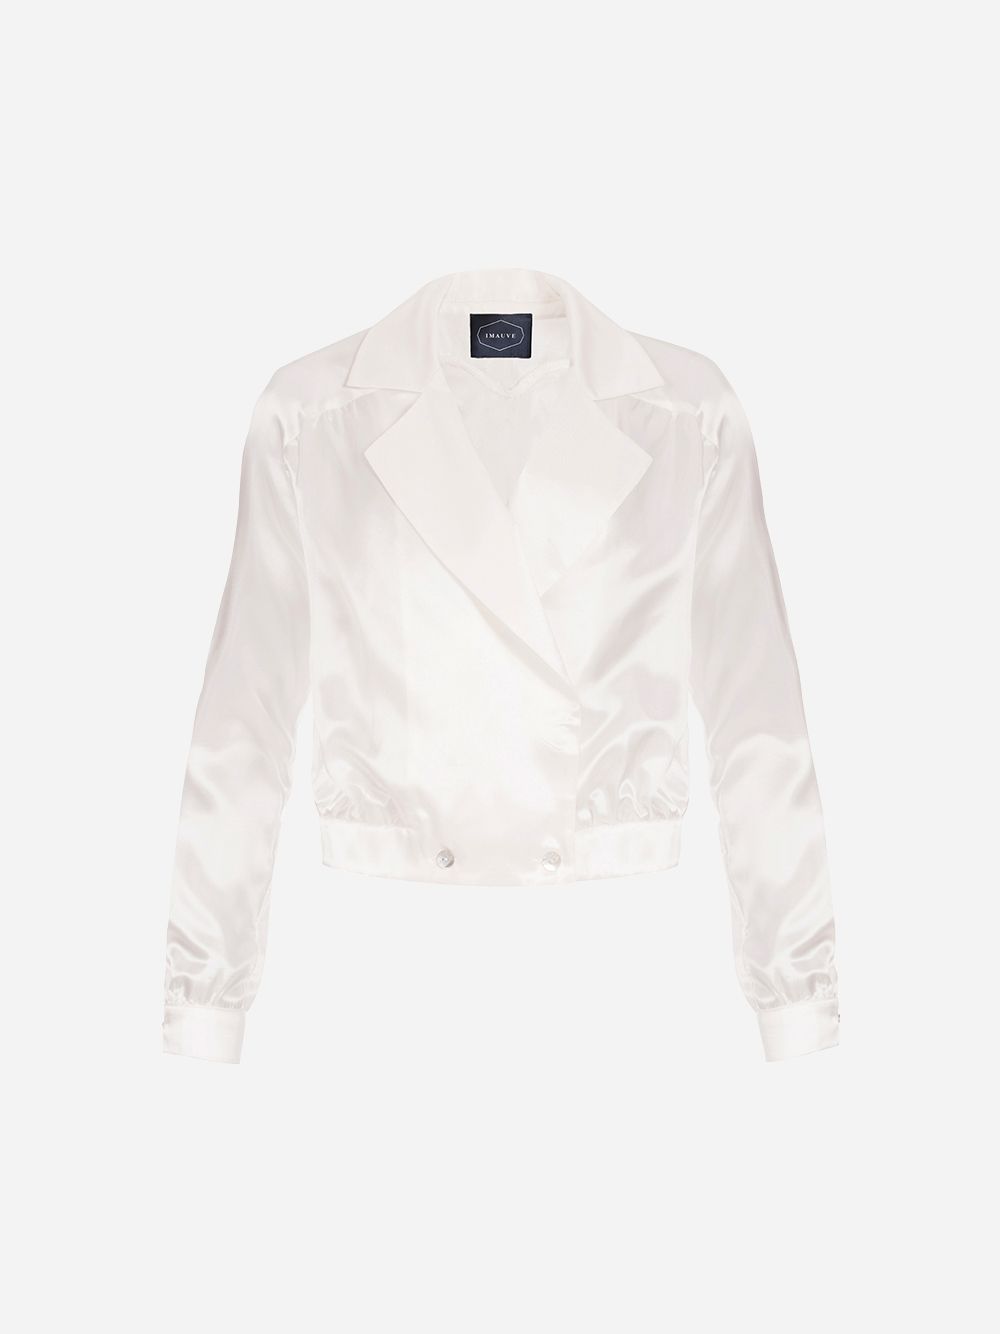 Crystal White Shirt | Imauve